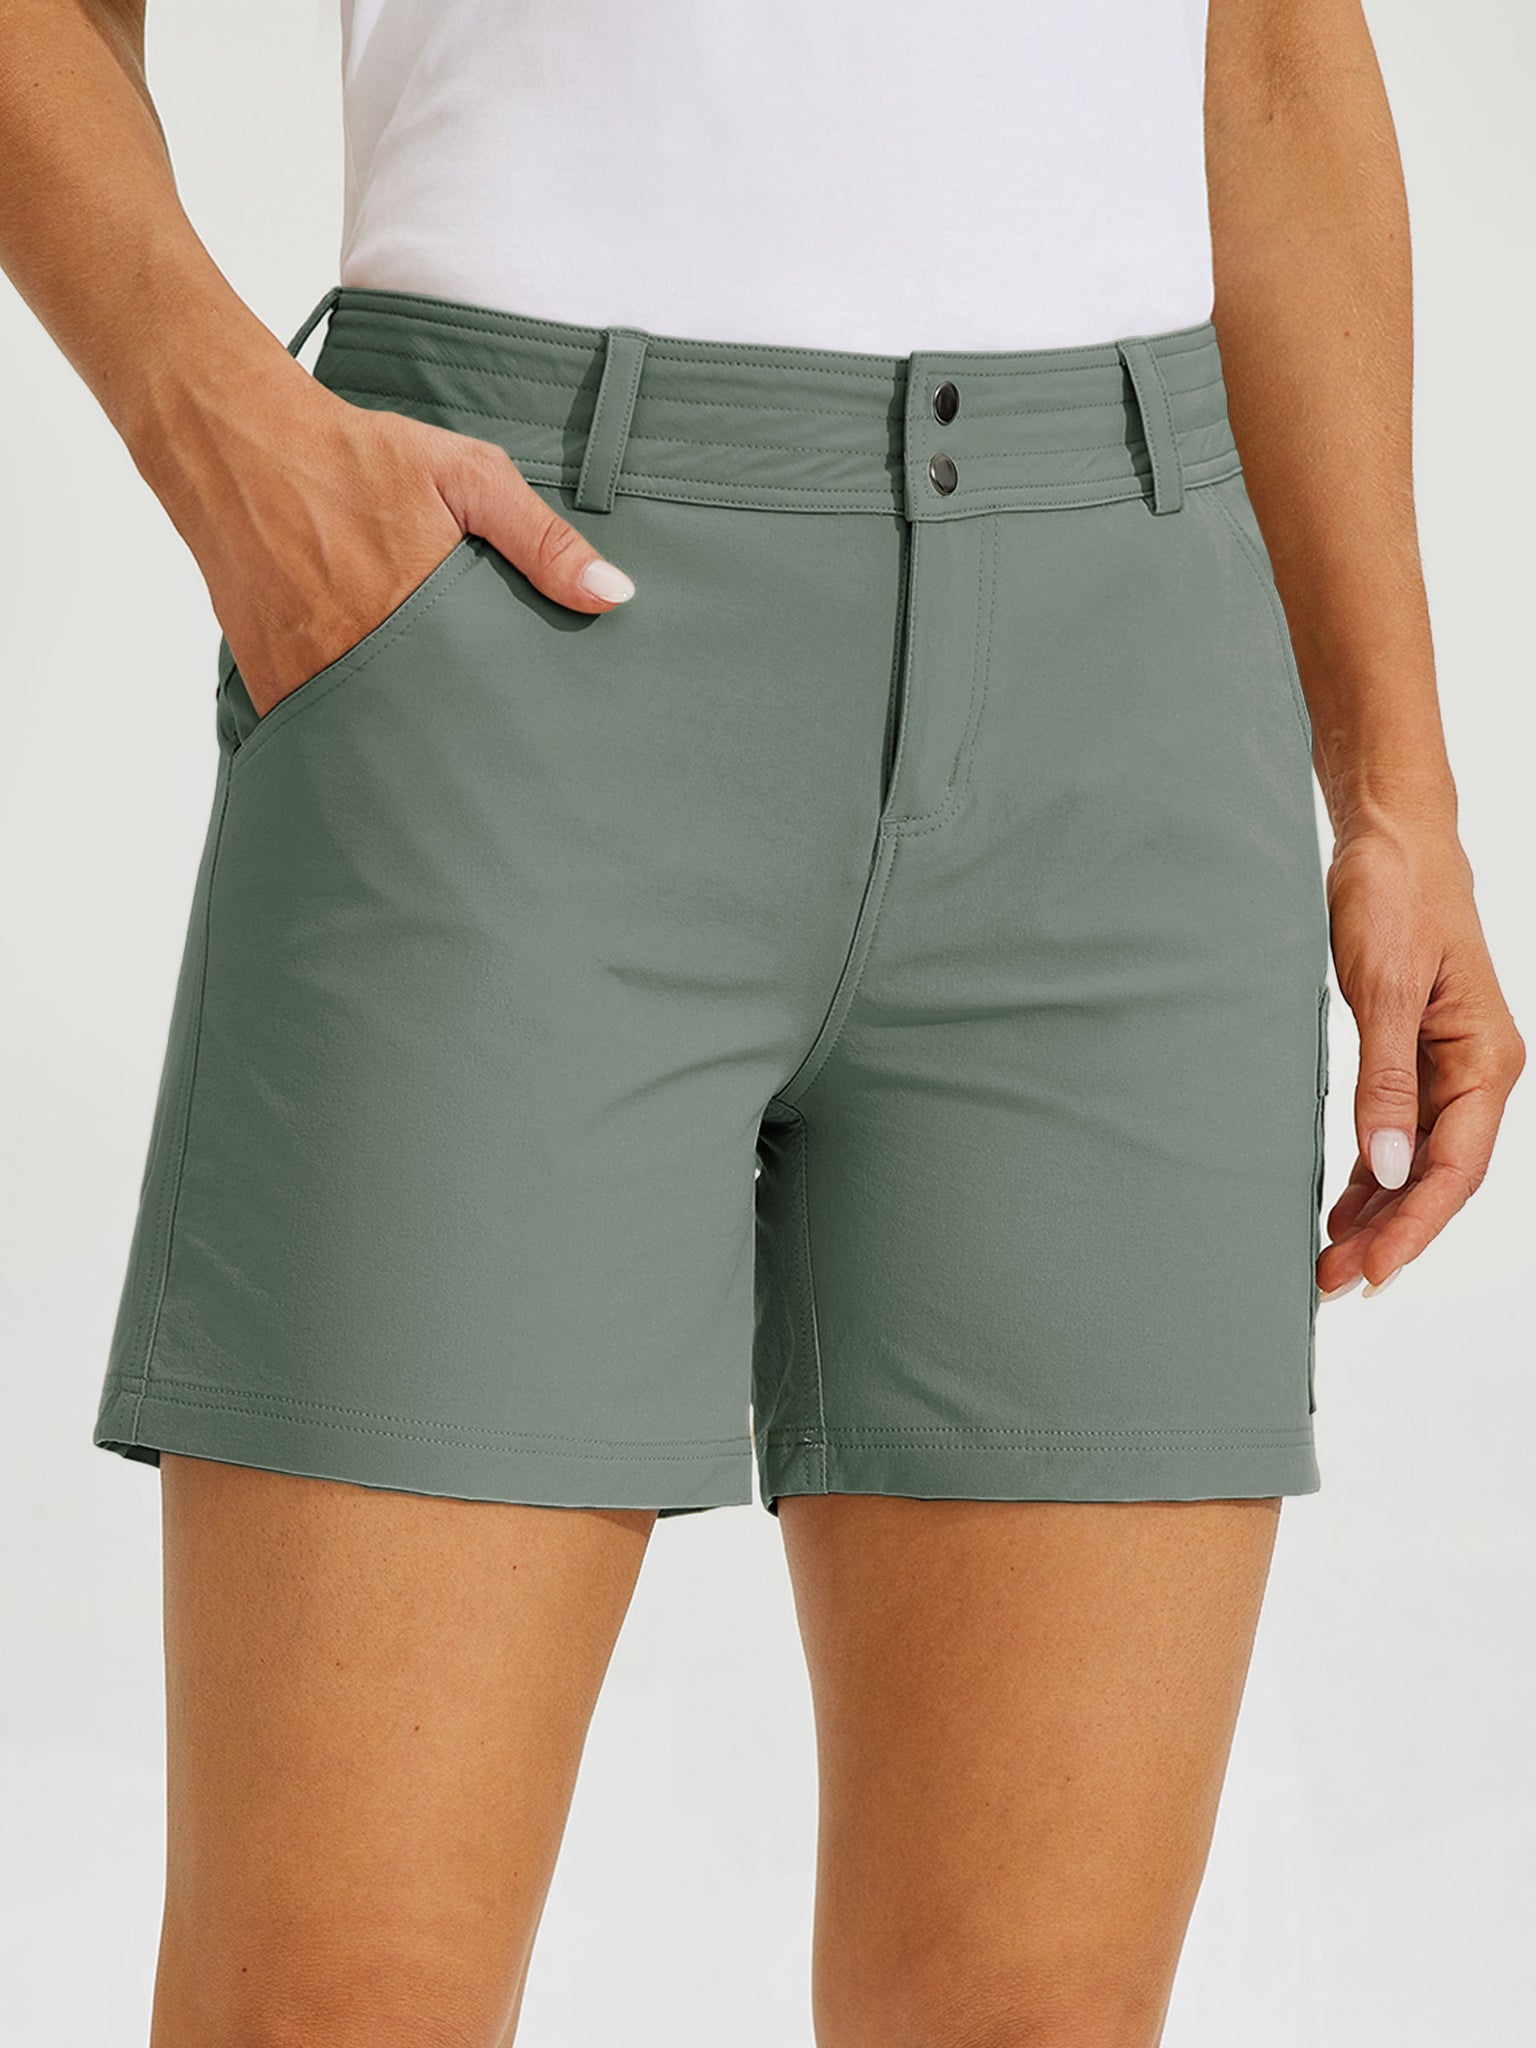 Women's Outdoor Pro Shorts 5Inch_Green1